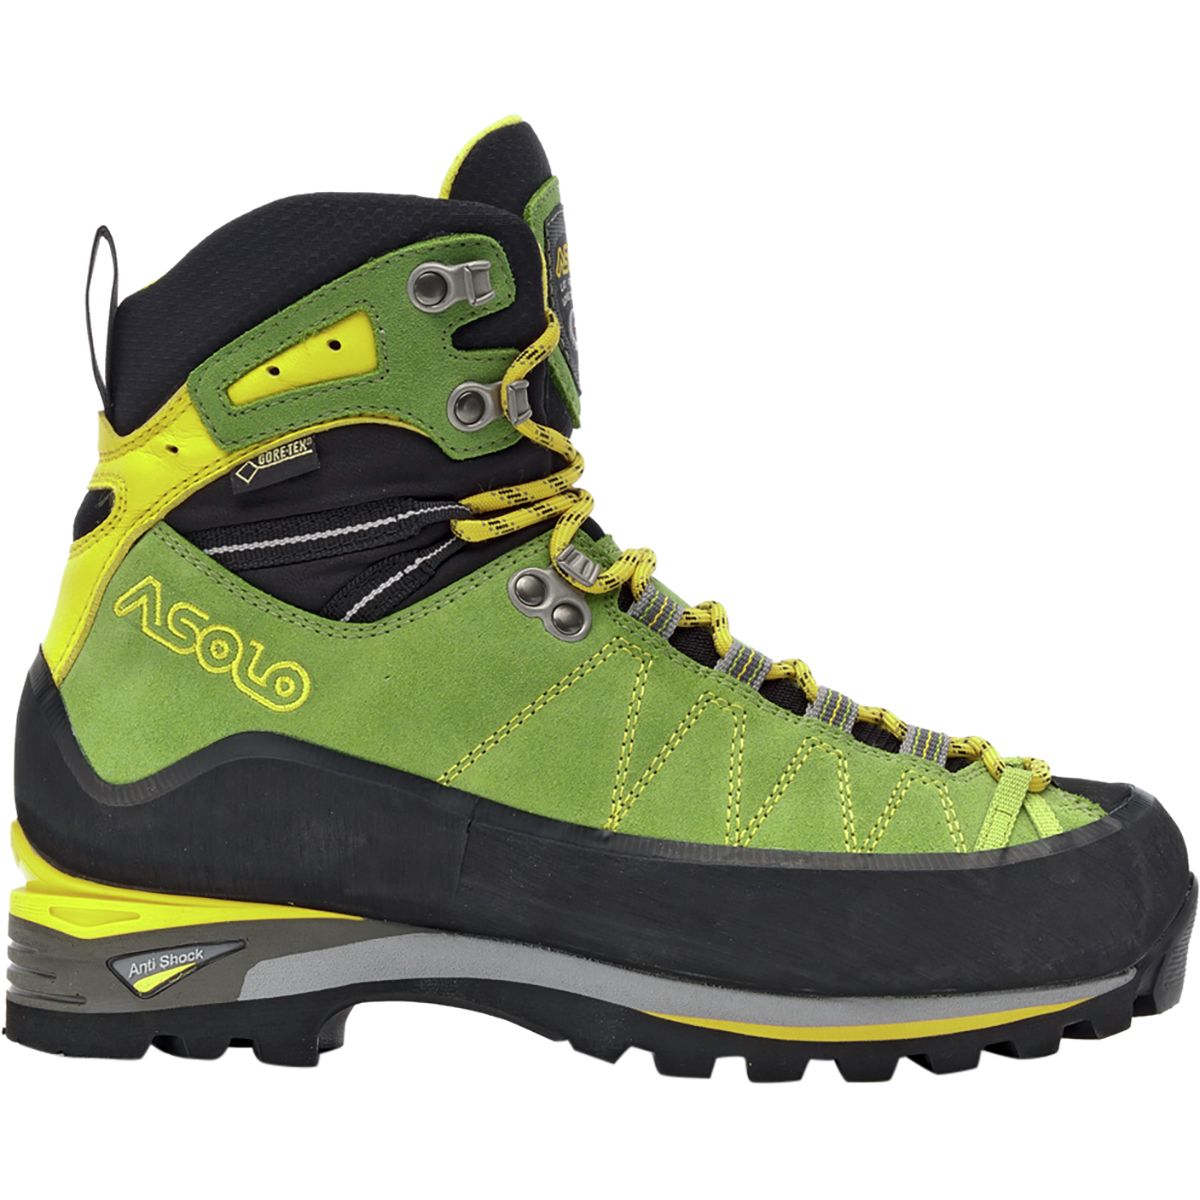 Elbrus GV Mountaineering Boot - Women